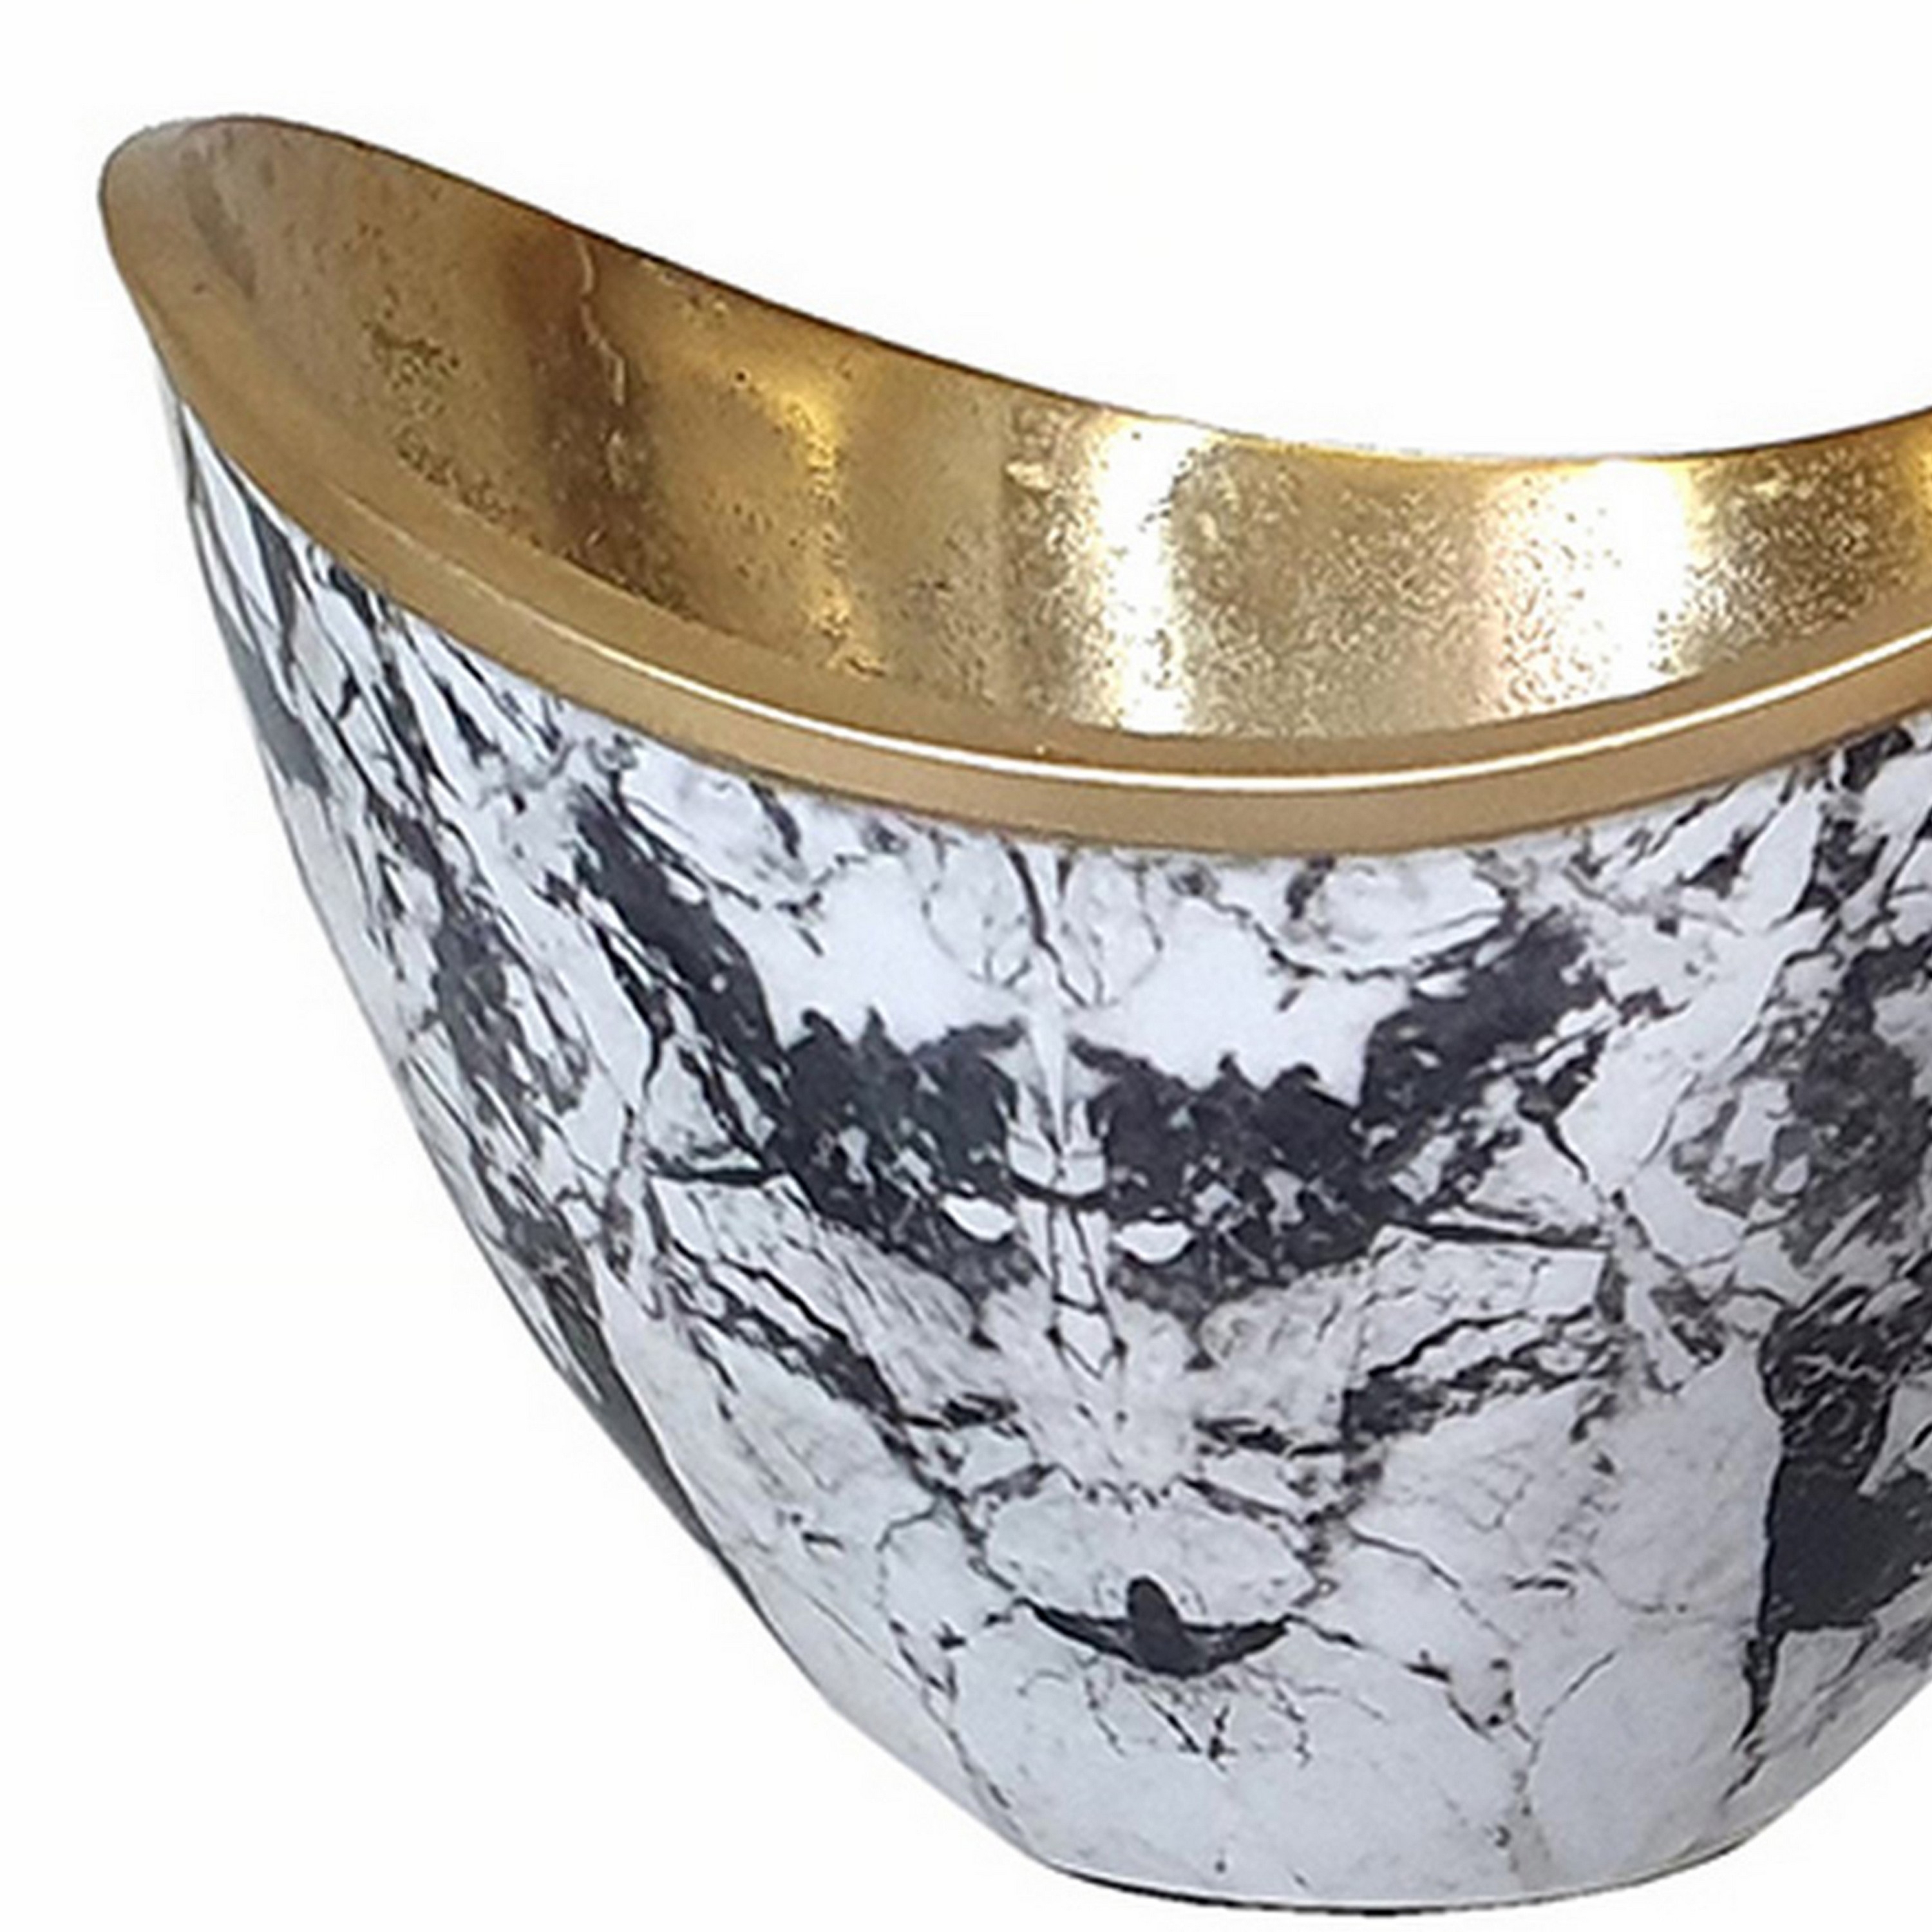 Sinzo Set Of 2 Curved Bowls, Gold Aluminum, Textured Design, Black, White- Saltoro Sherpi